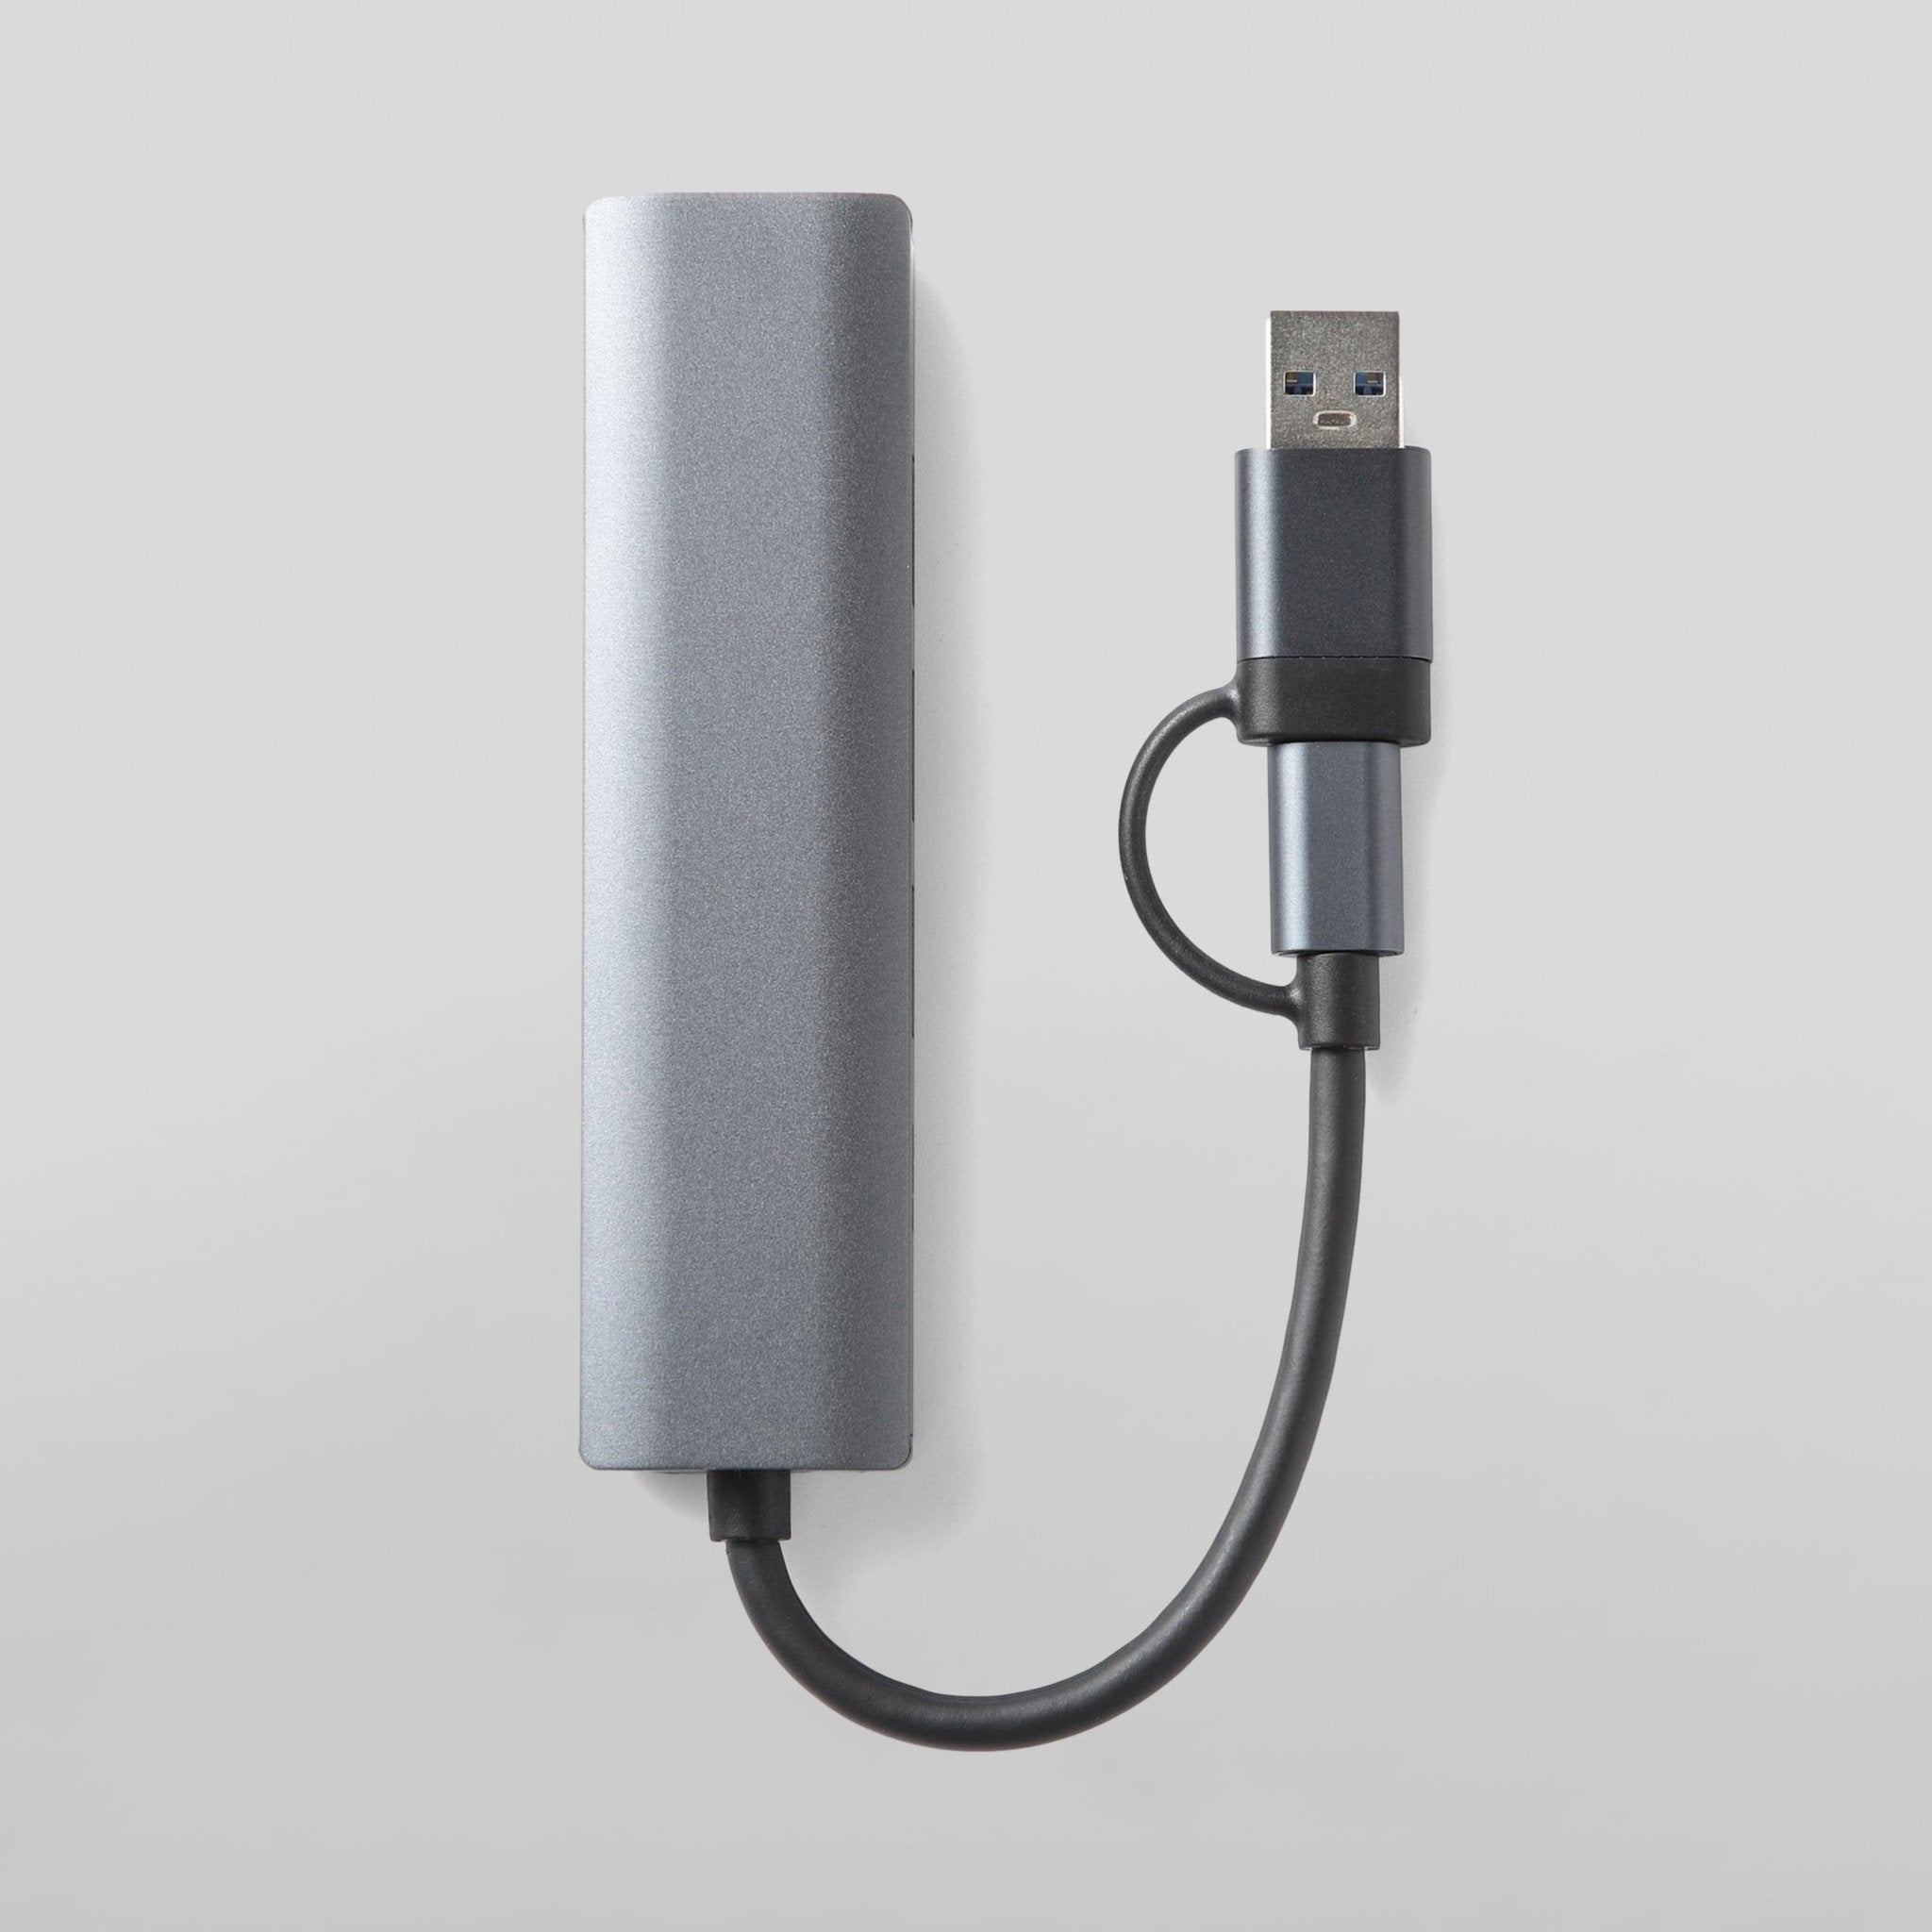 UGREEN USB 3.0 Combo—USB 3.0 Giga Ethernet + 3 ports USB 3.0 Hub Price in  Nepal